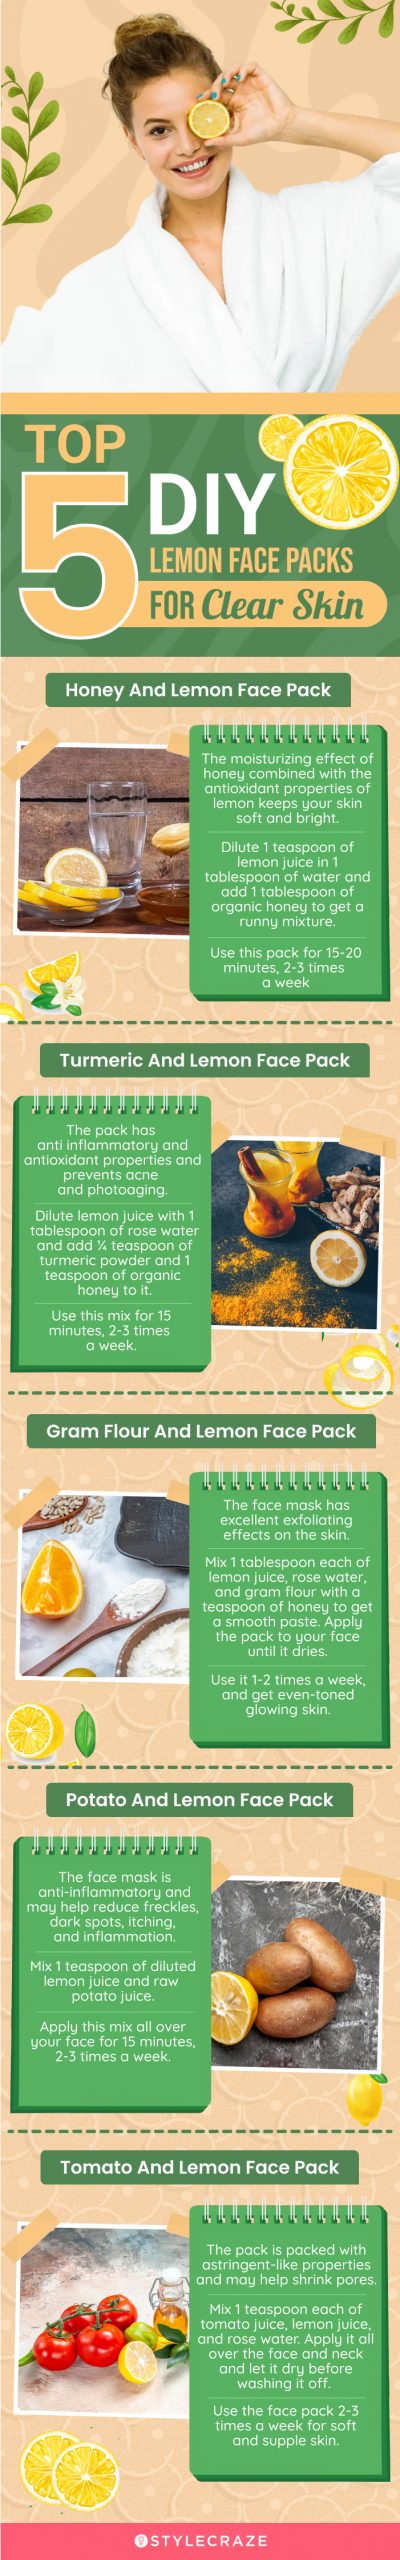 top 5 diy lemon face packs for clear skin (infographic)